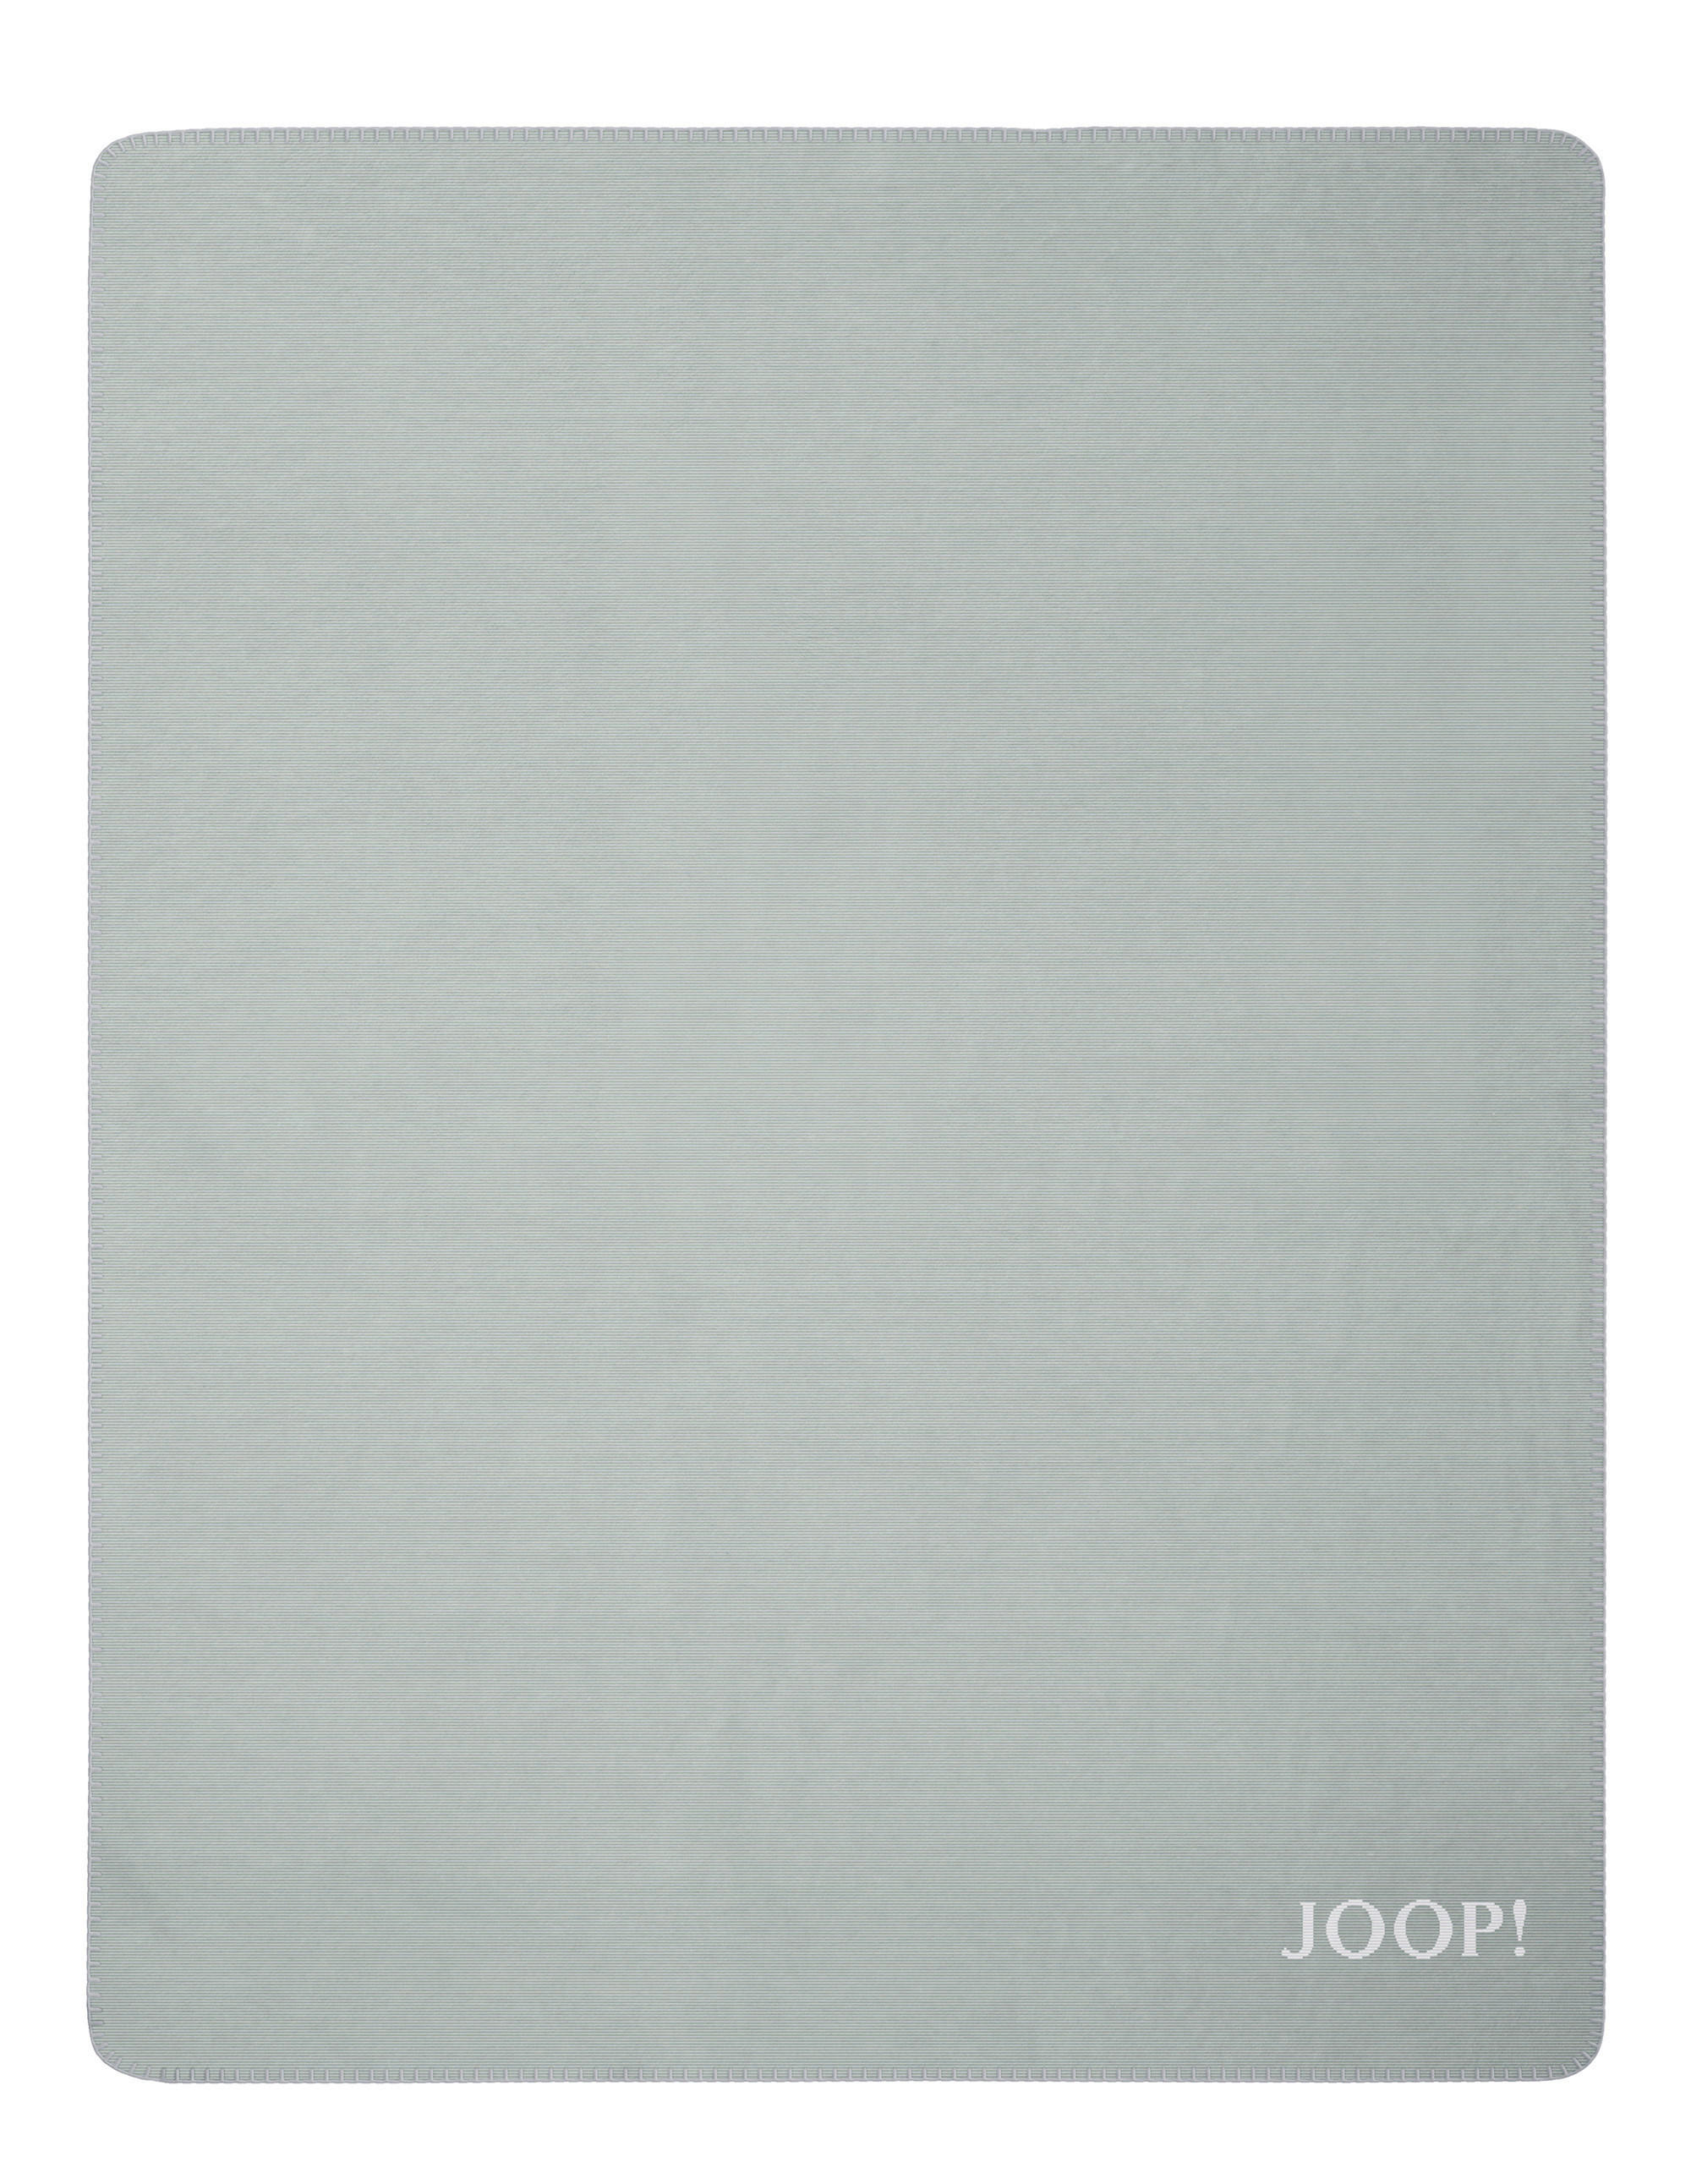 WOHNDECKE Melange Doubleface 150/200 cm  - Naturfarben/Grün, Design, Textil (150/200cm) - Joop!